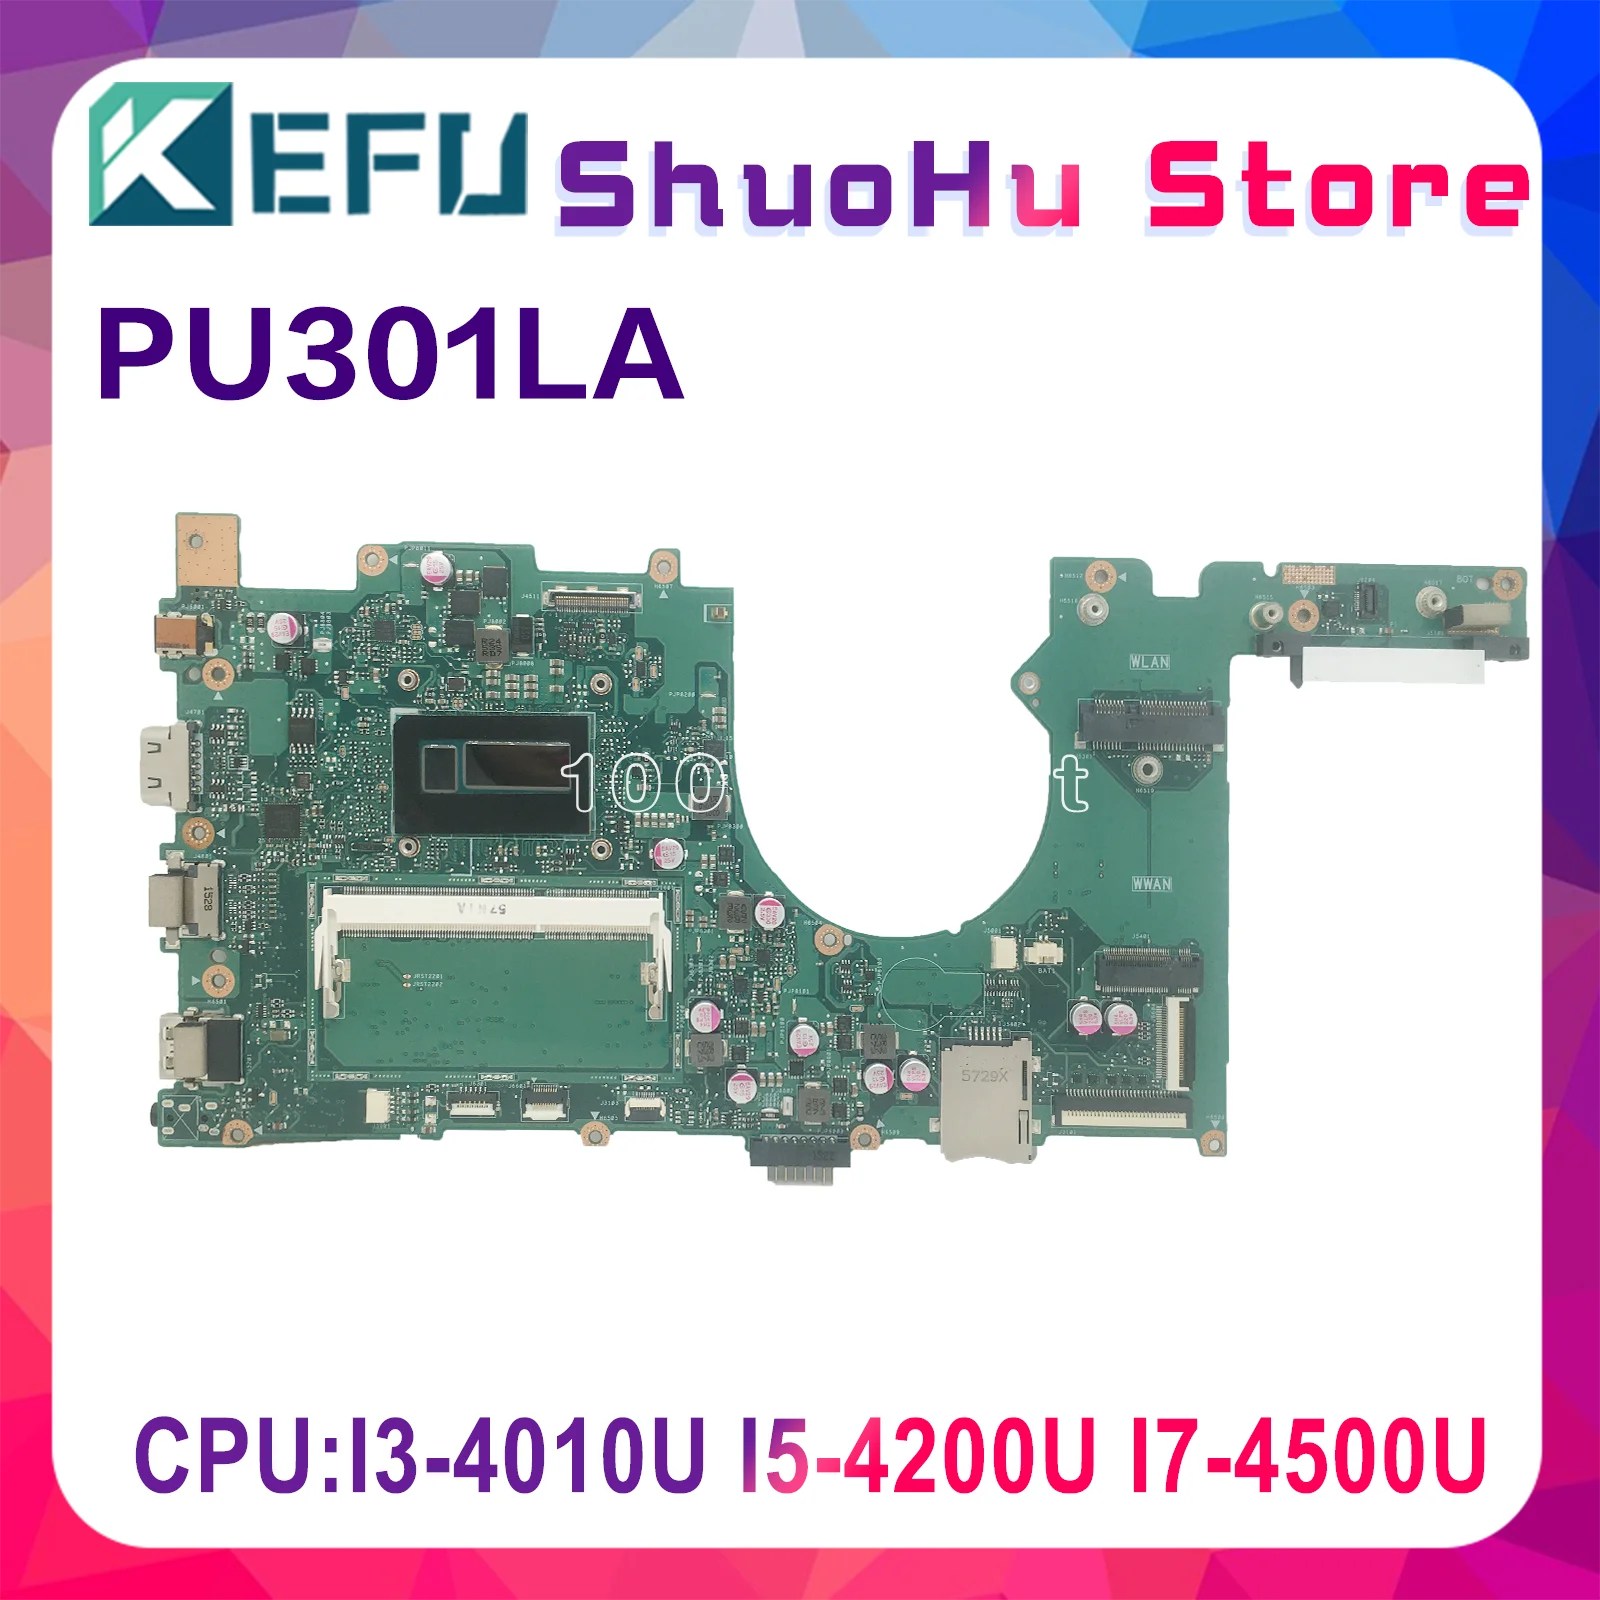 

KEFU PU301LA Mainboard For ASUS PU301L W/ I3-4005U/4010U I5-4200U I7- 4500U New Laptop Motherboard Full Function Test Work 100%